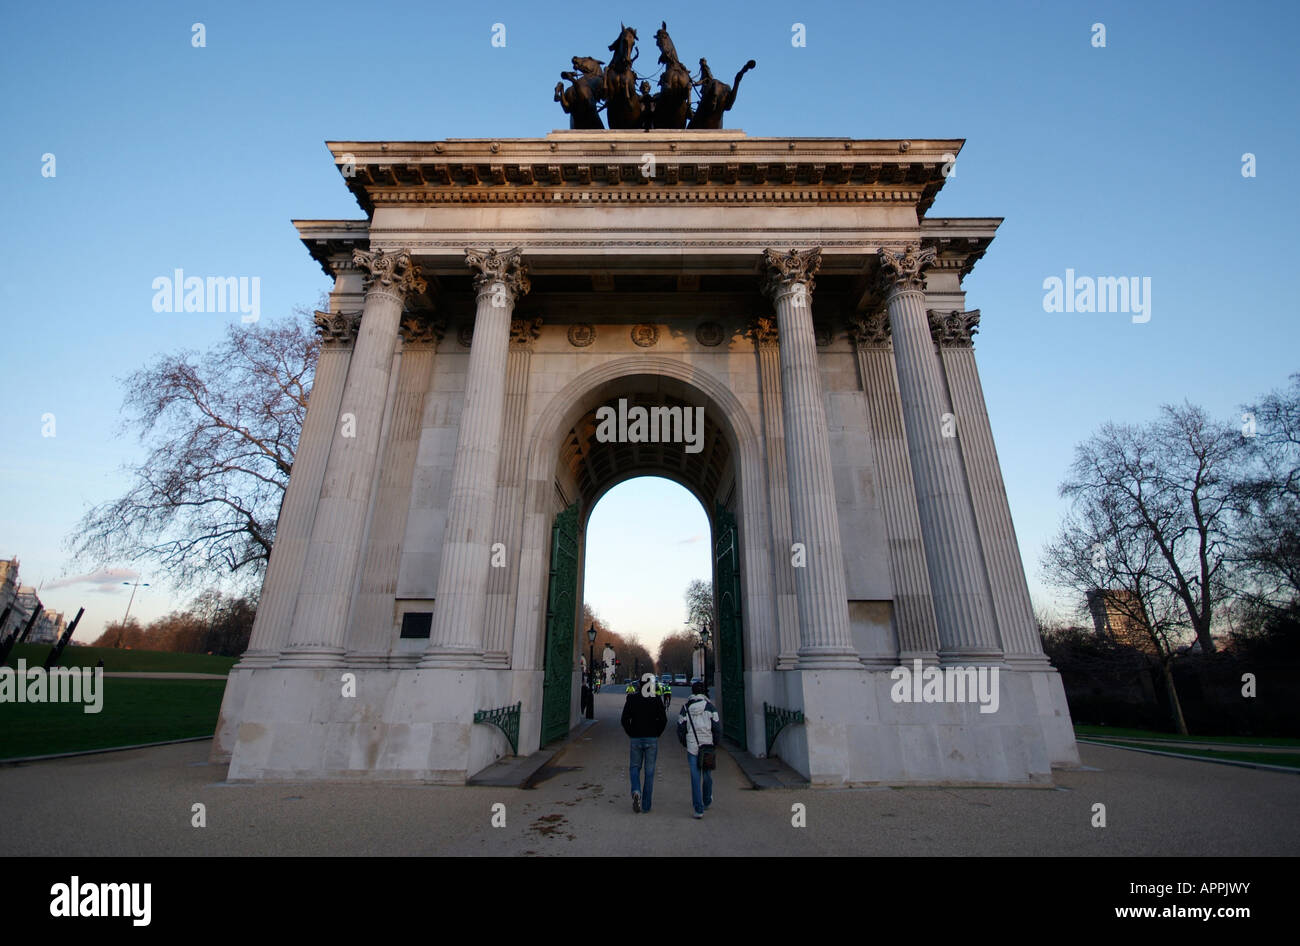 The Quadriga atop Wellington Arch in London. Stock Photo